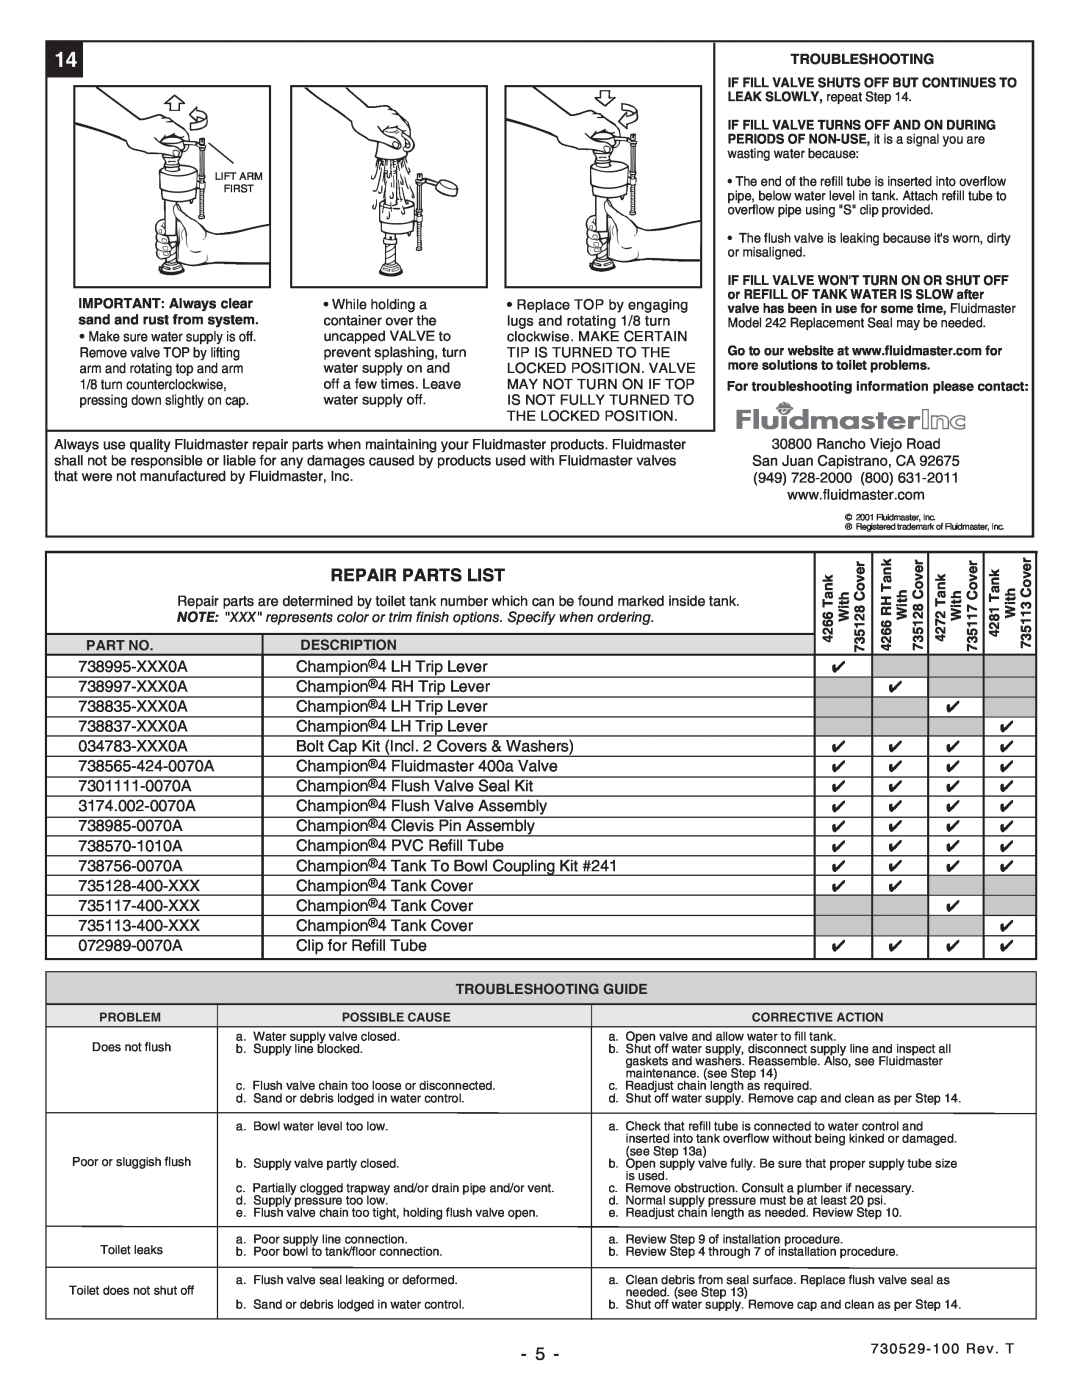 American Standard 2793, 2002, 3186, 2792, 2586, 2585, 2414, 2023, 2018 installation instructions Repair Parts List 